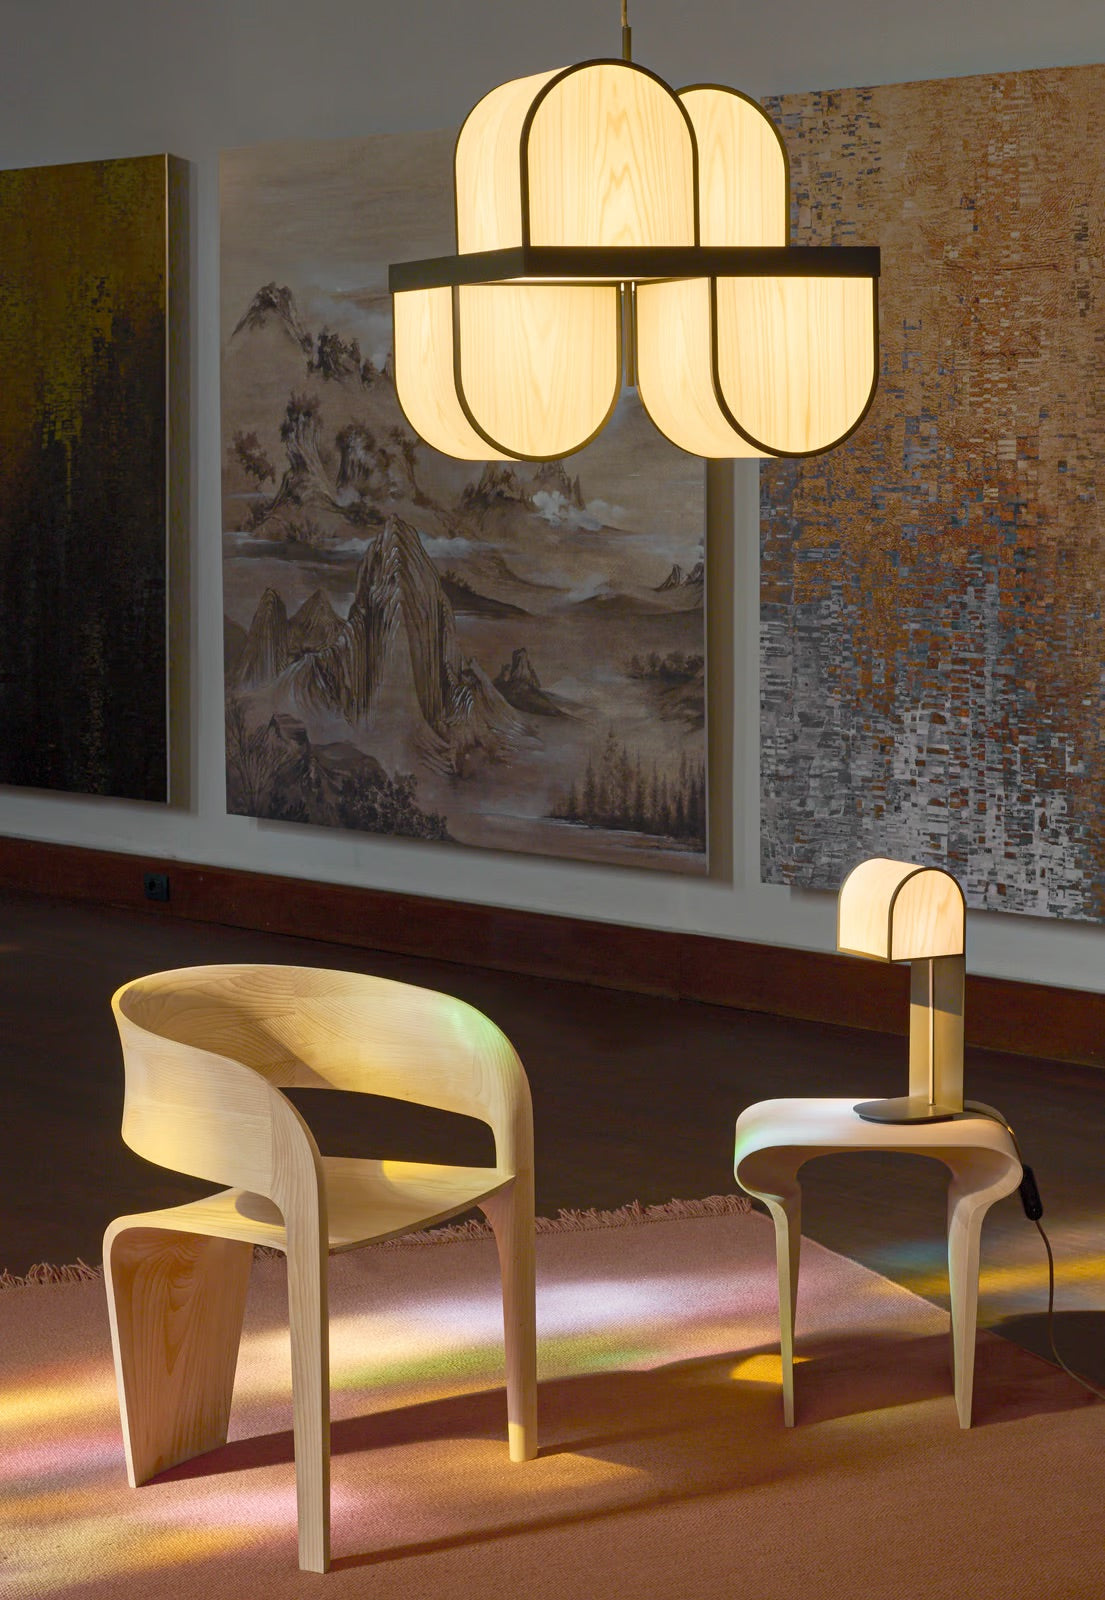 Wood Veneer Suspended lamp. Bauhaus lighting. bauhaus design with midcentury Modern natural veneer